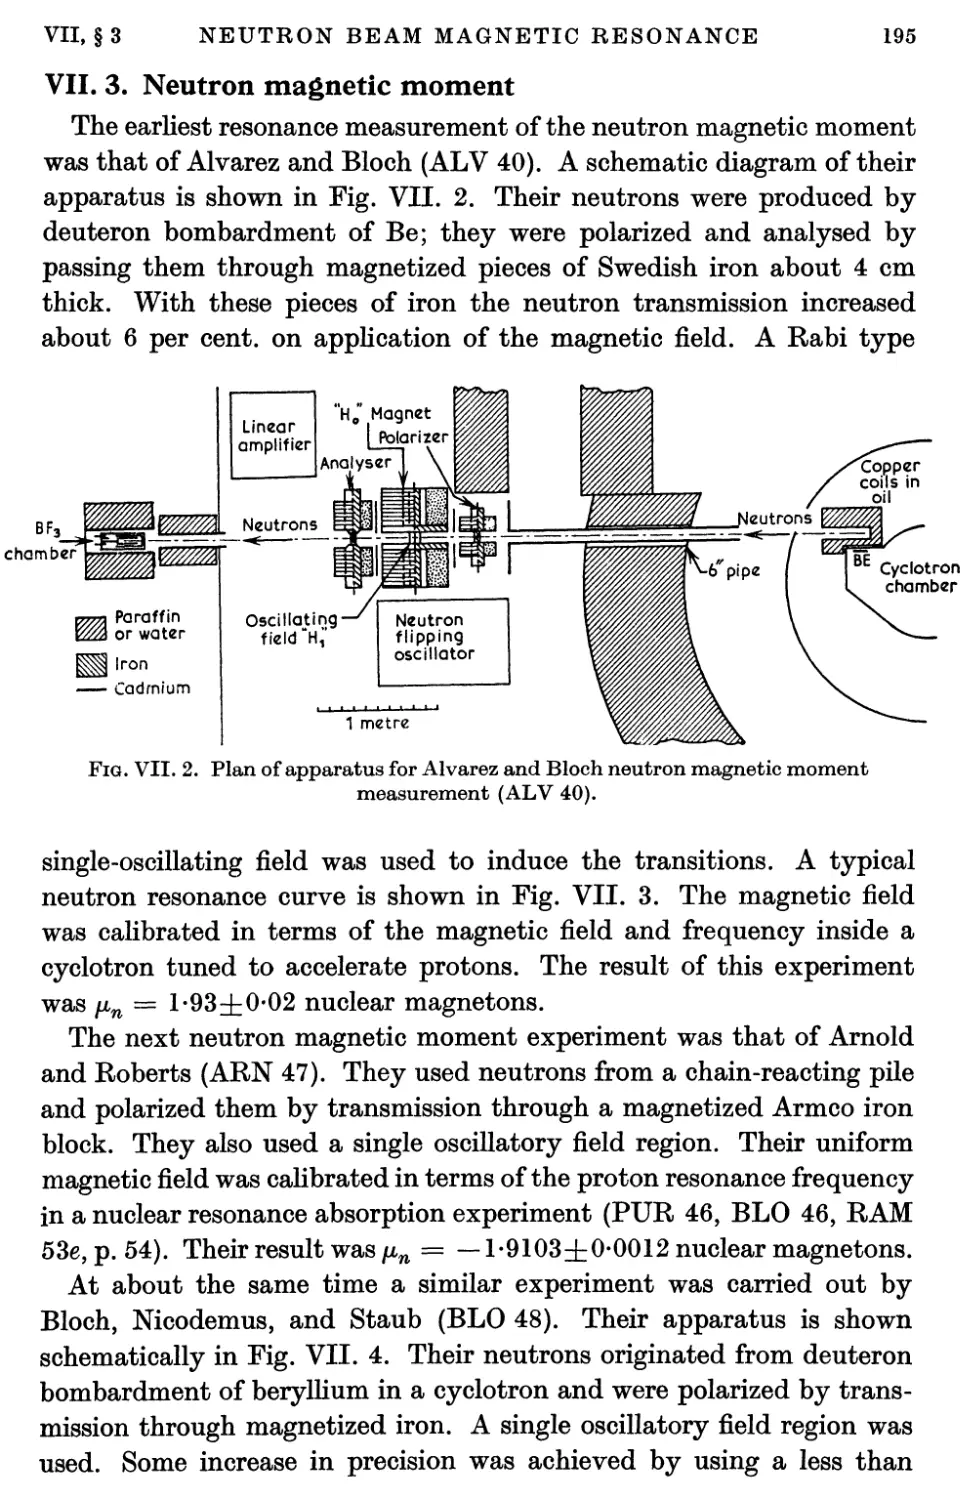 VII.3. Neutron Magnetic Moment